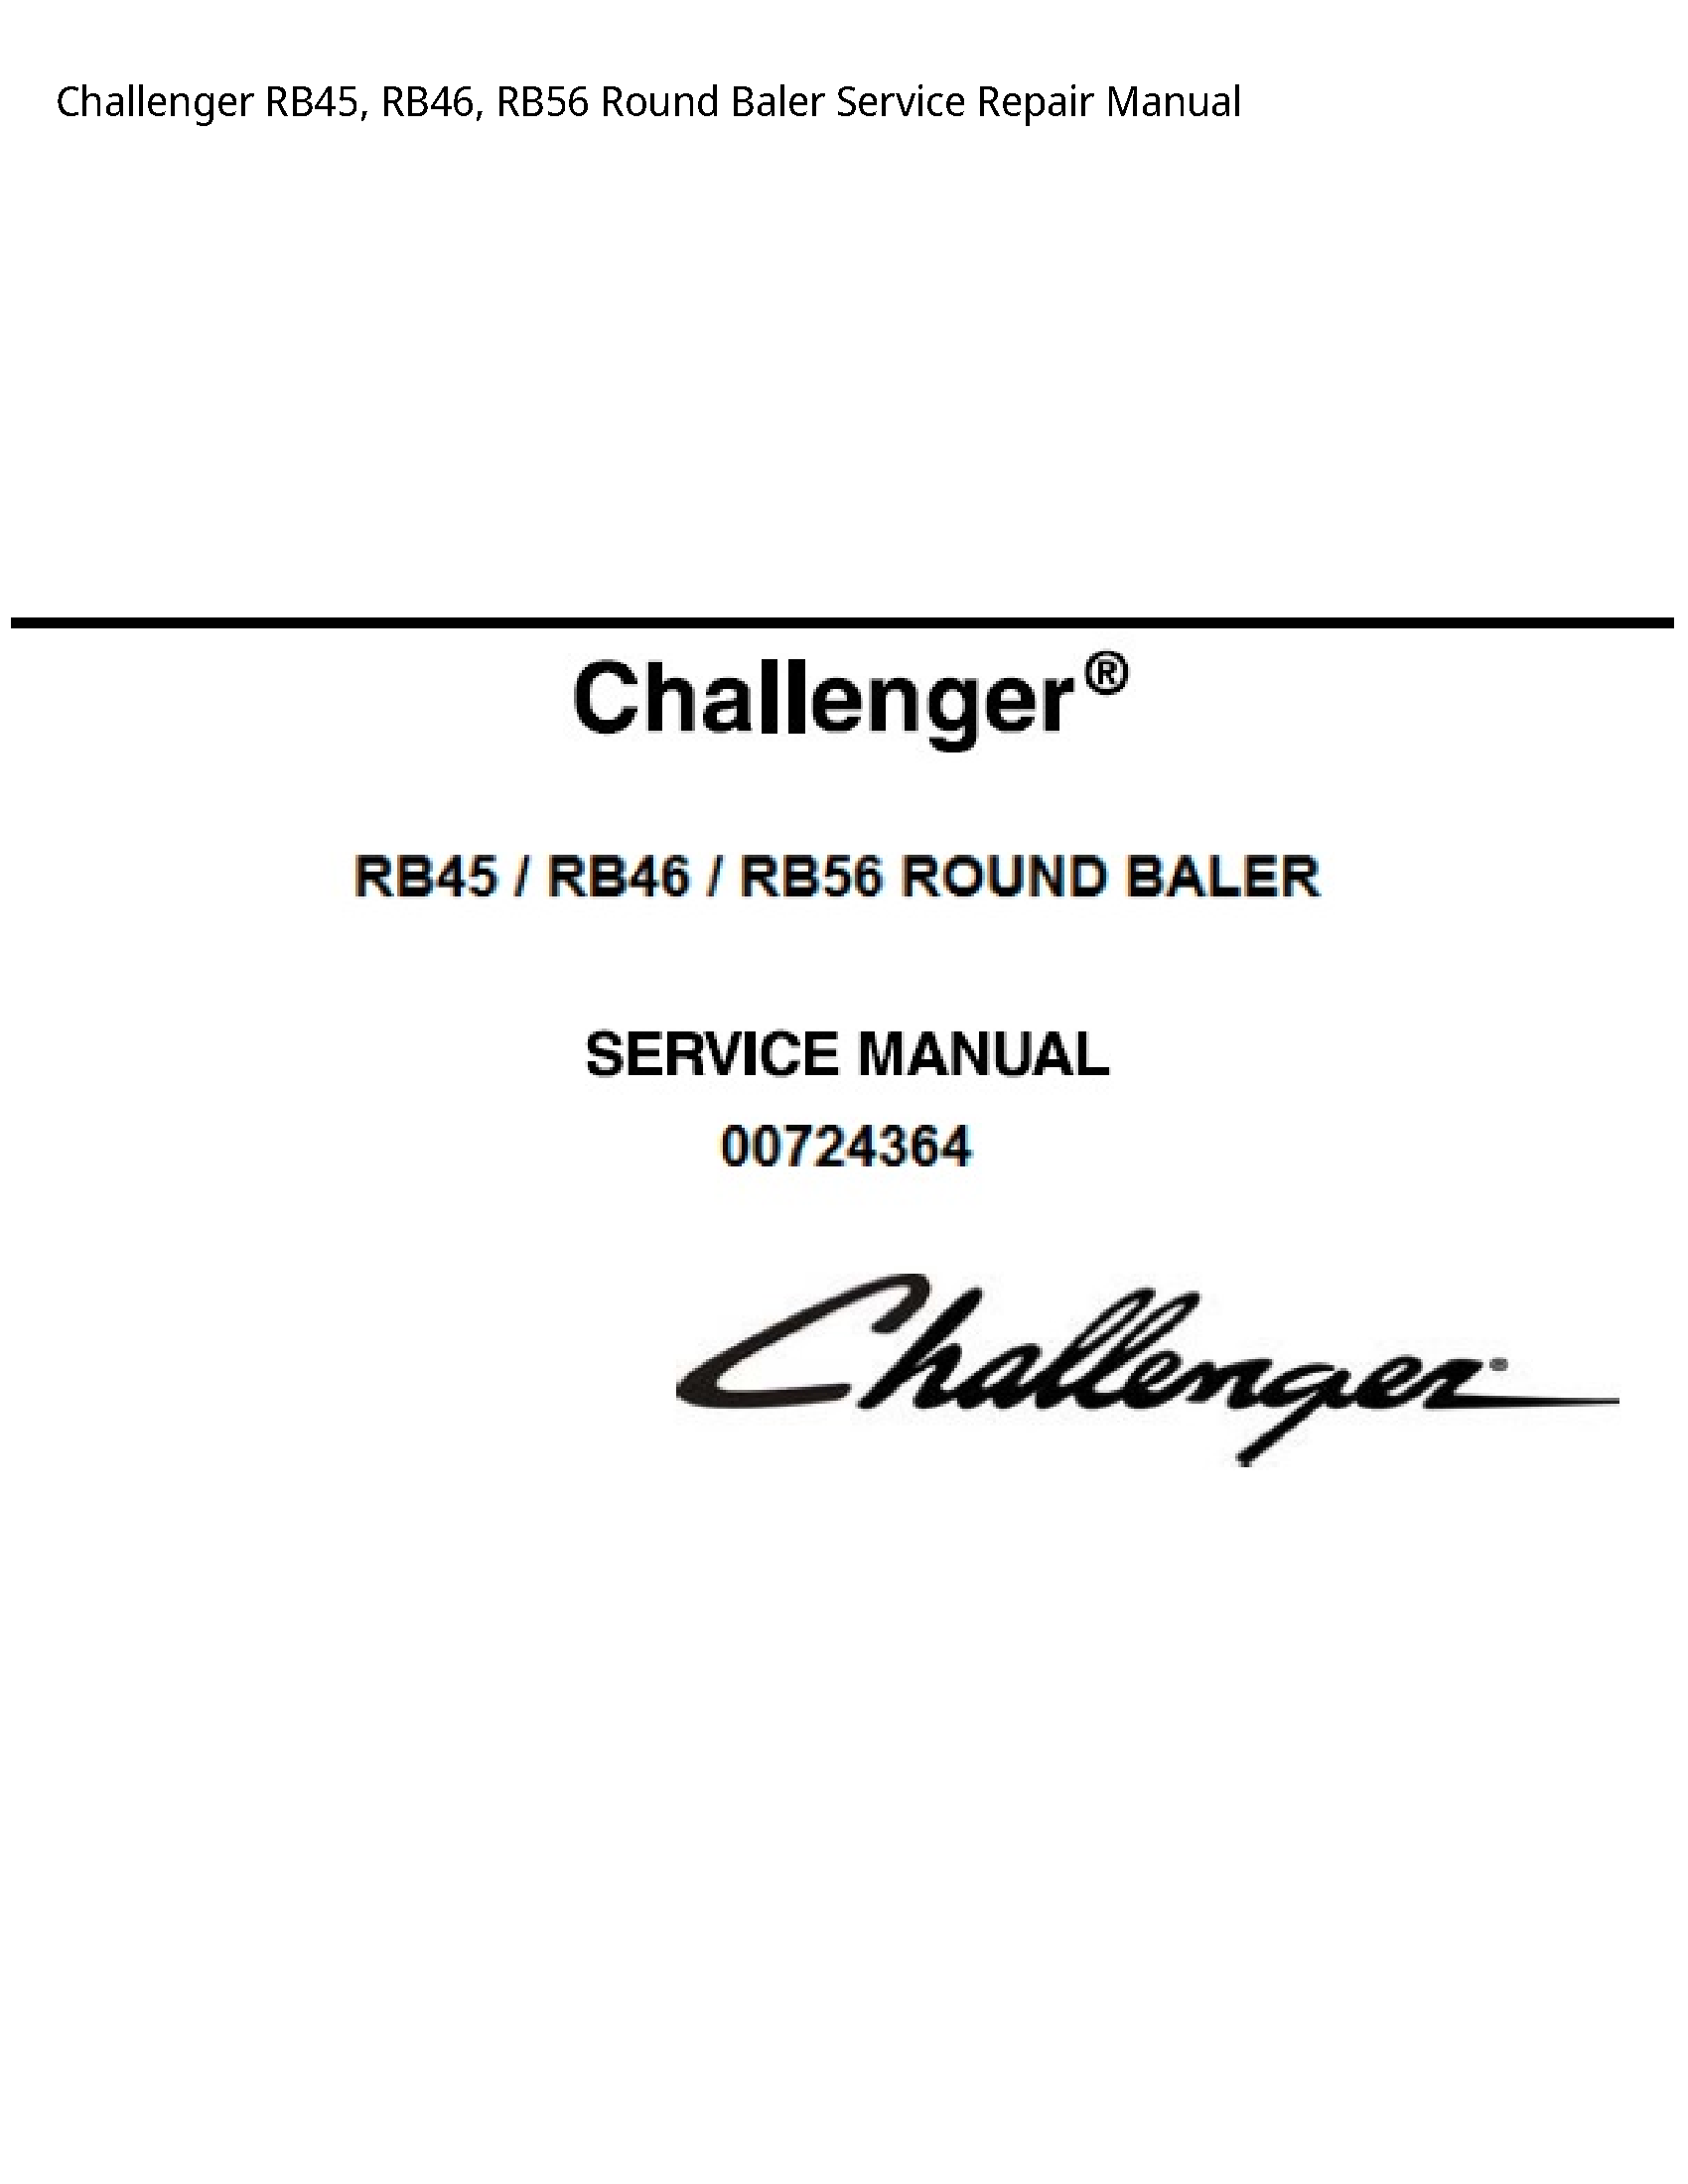 Challenger RB45 Round Baler manual